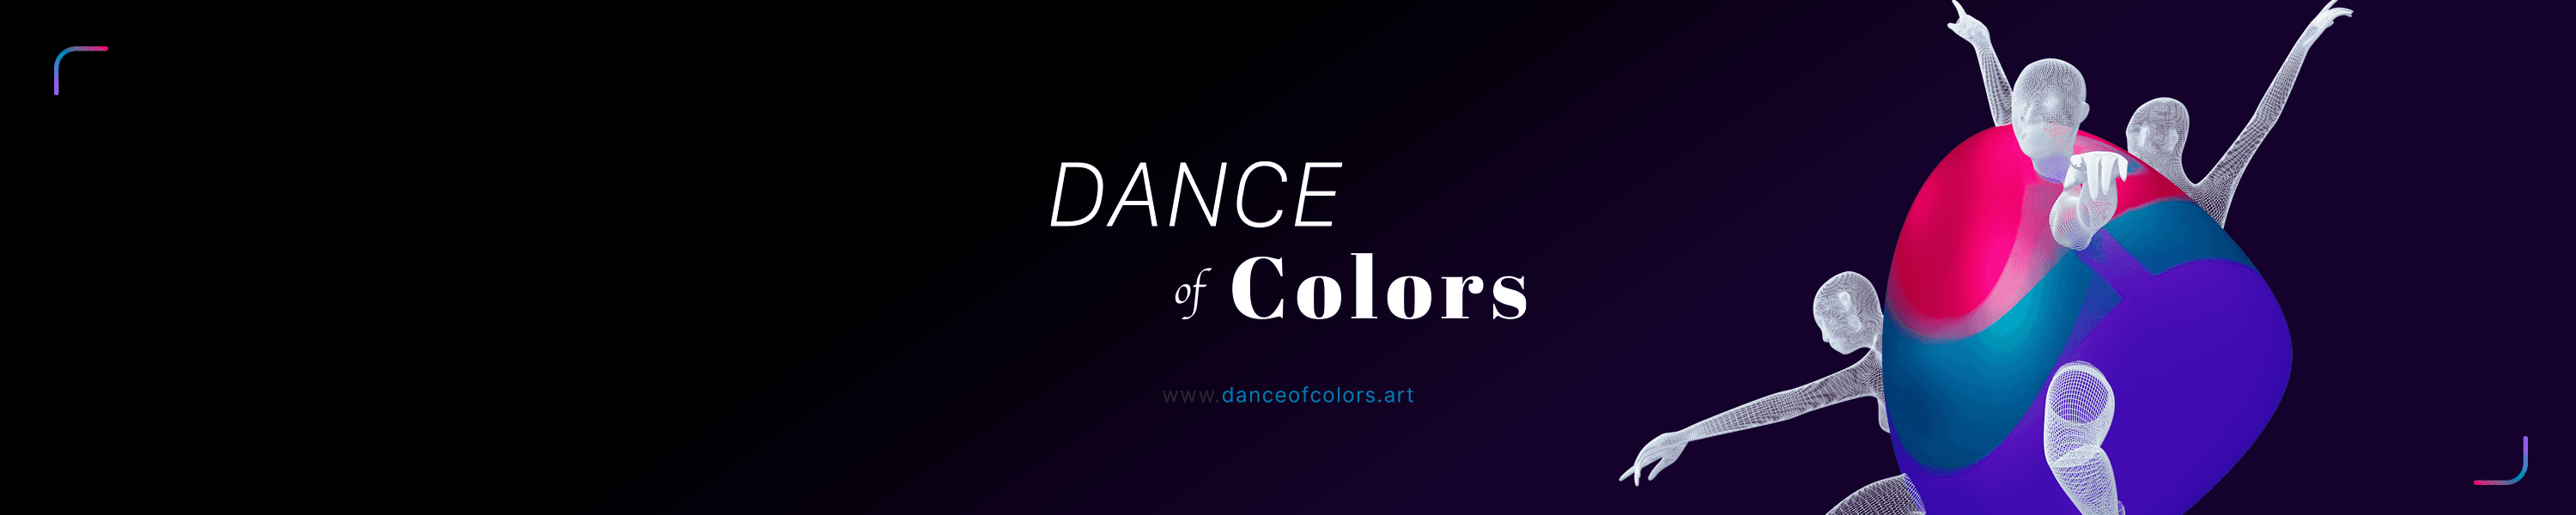 Dance of Colors